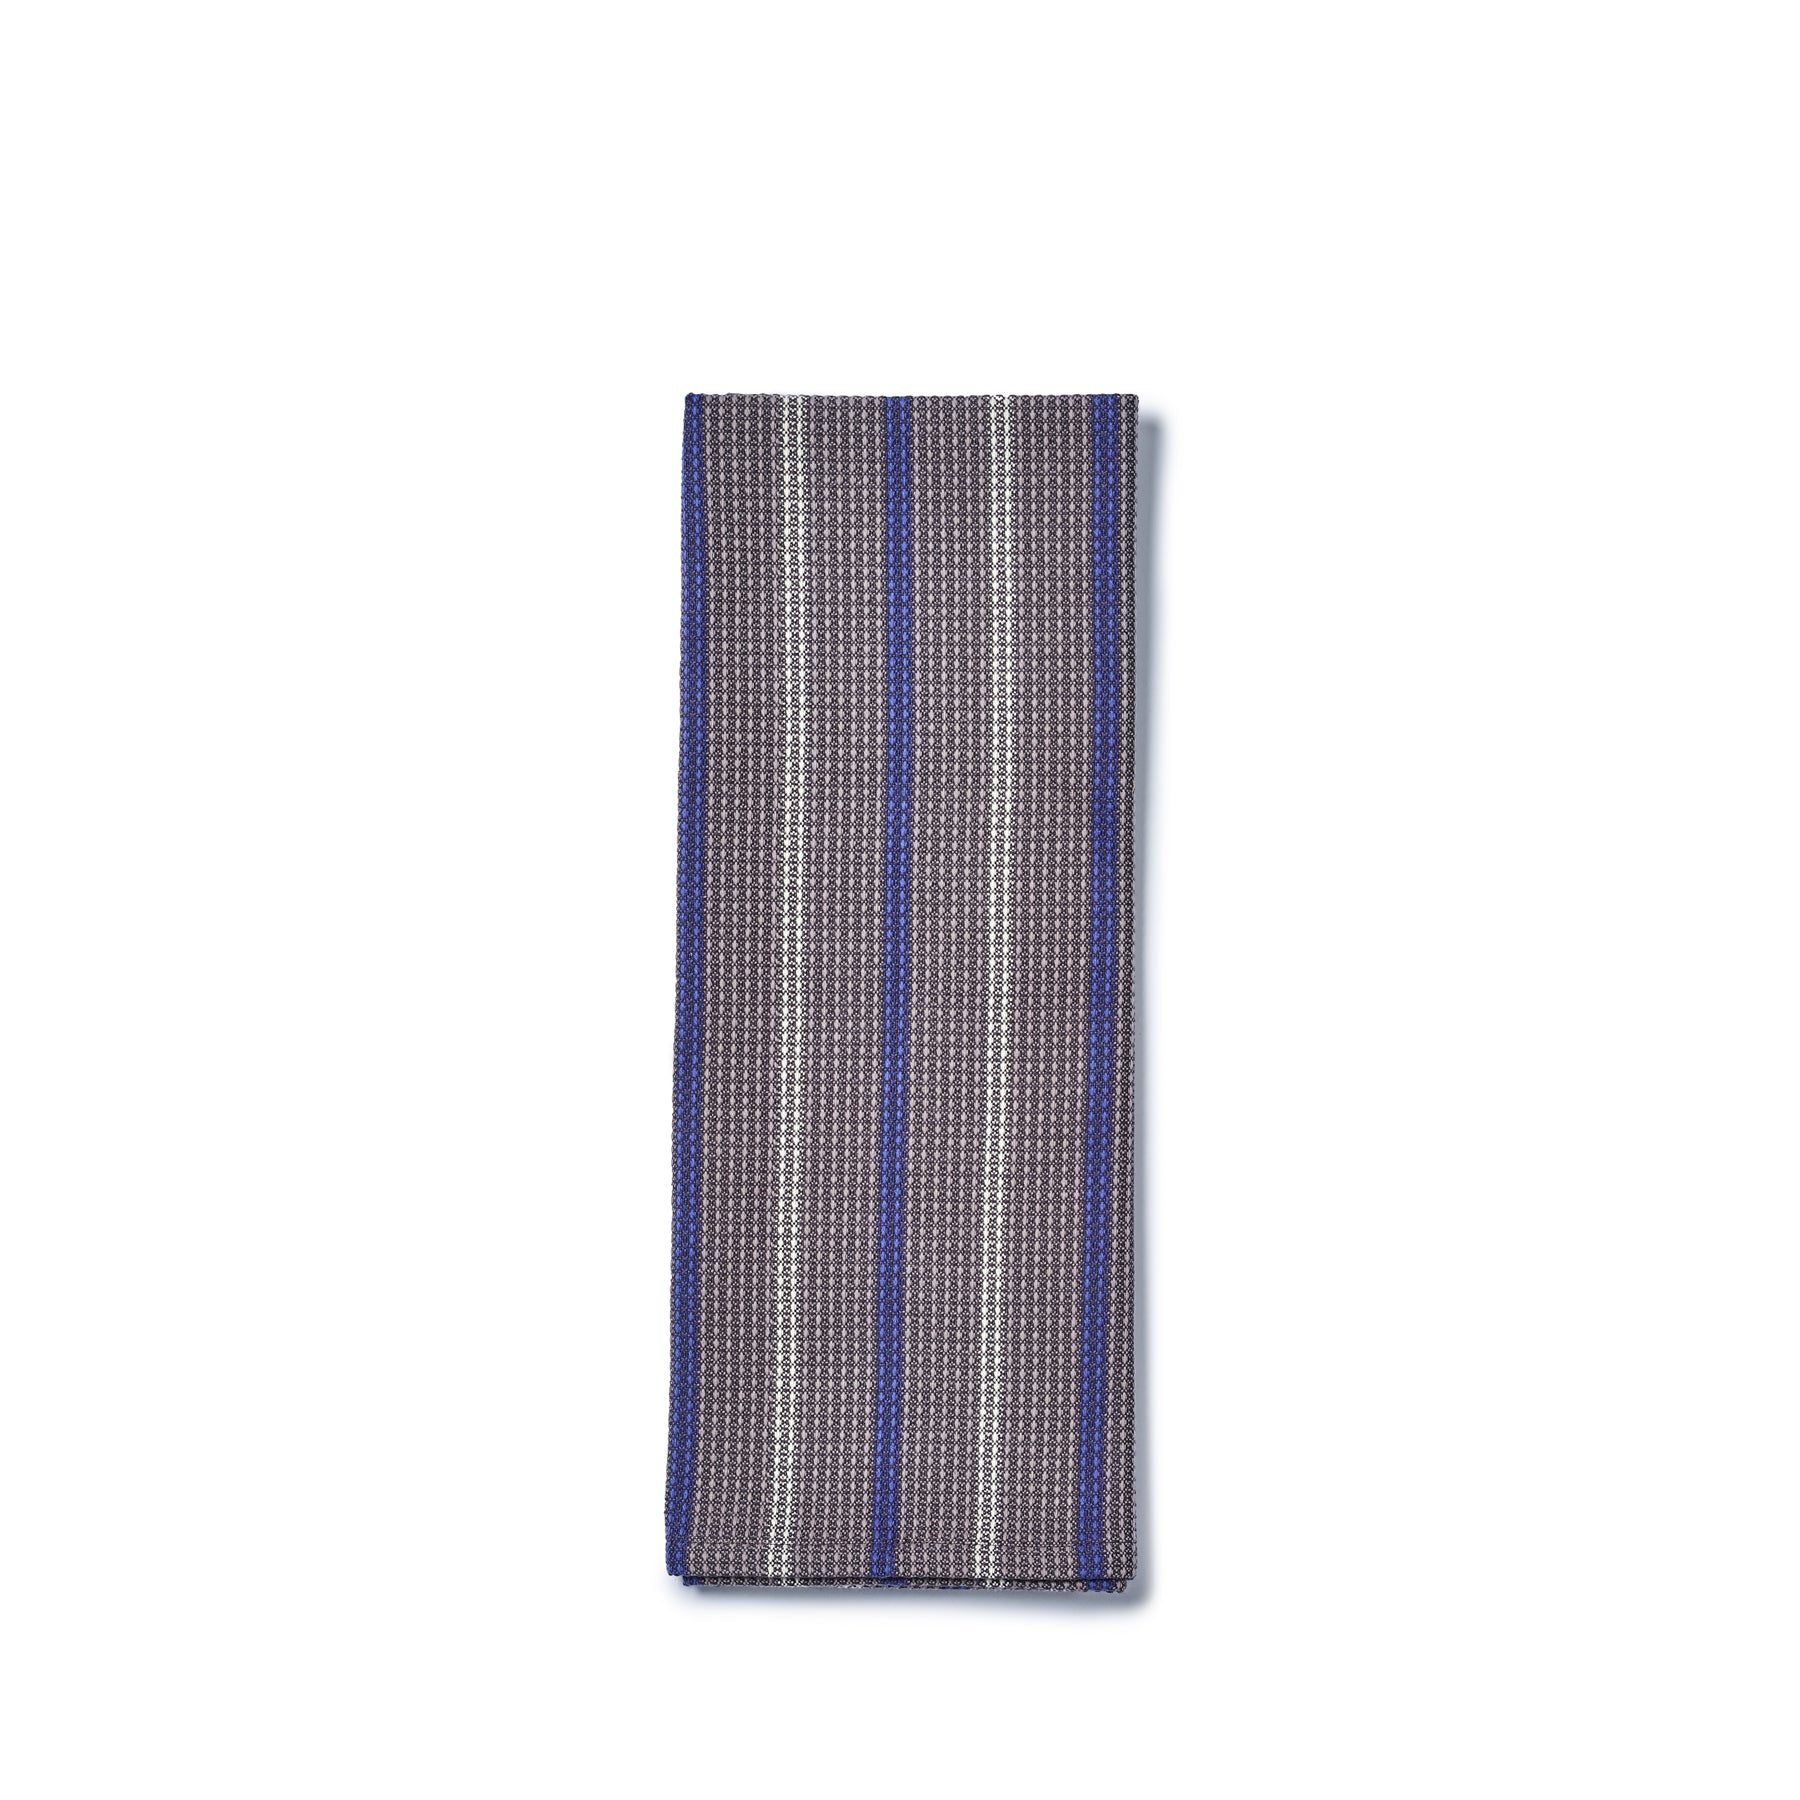 Slate Cotton Waffle Weave Tea Towel in Iron Zoom Image 1